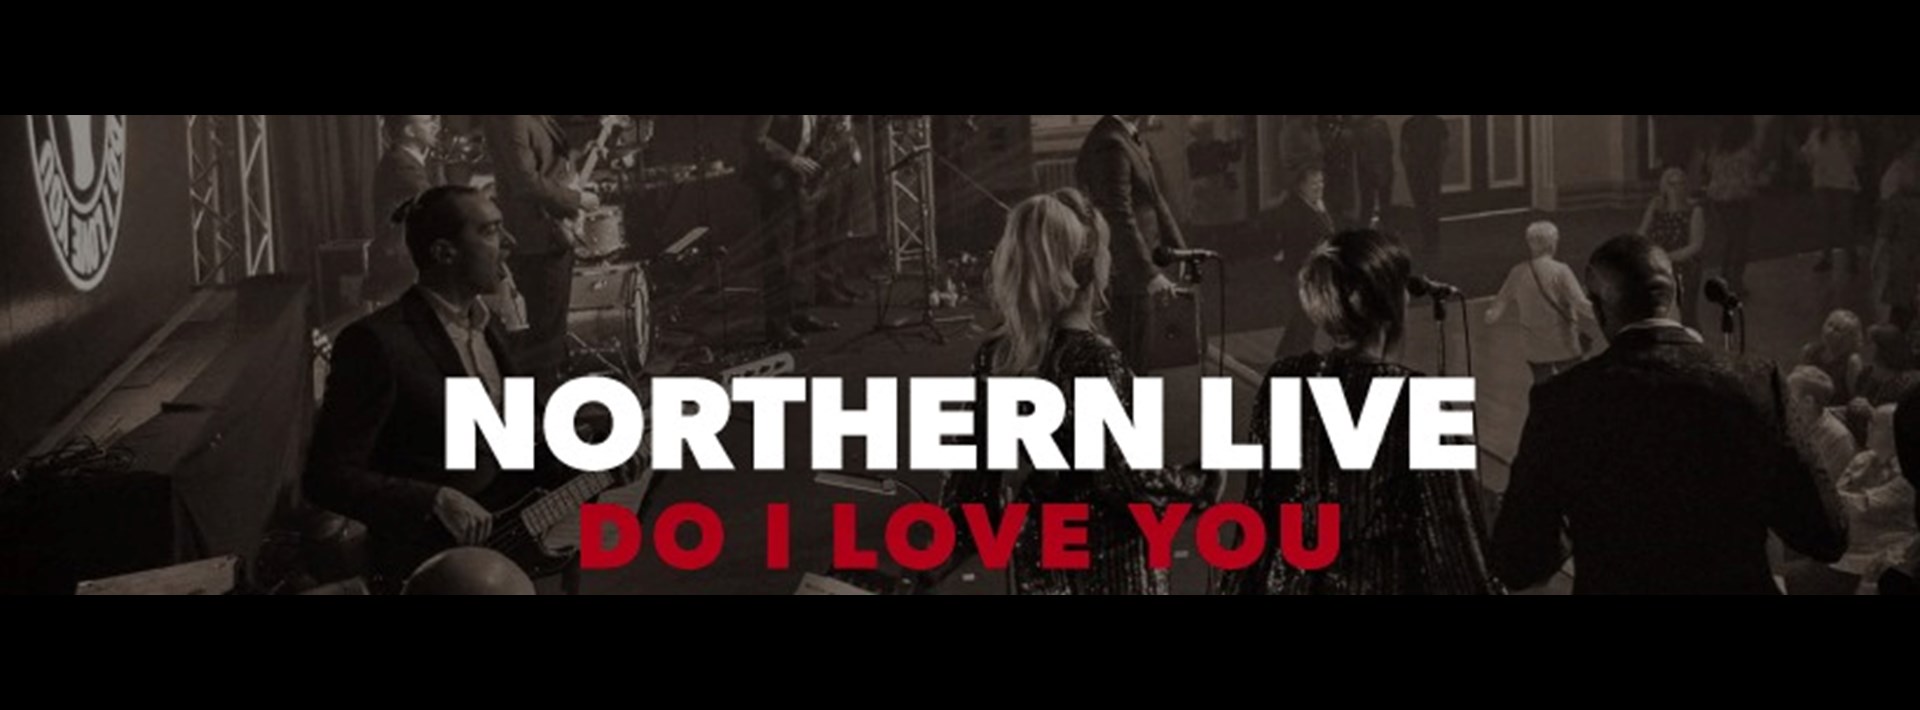 Northern Live